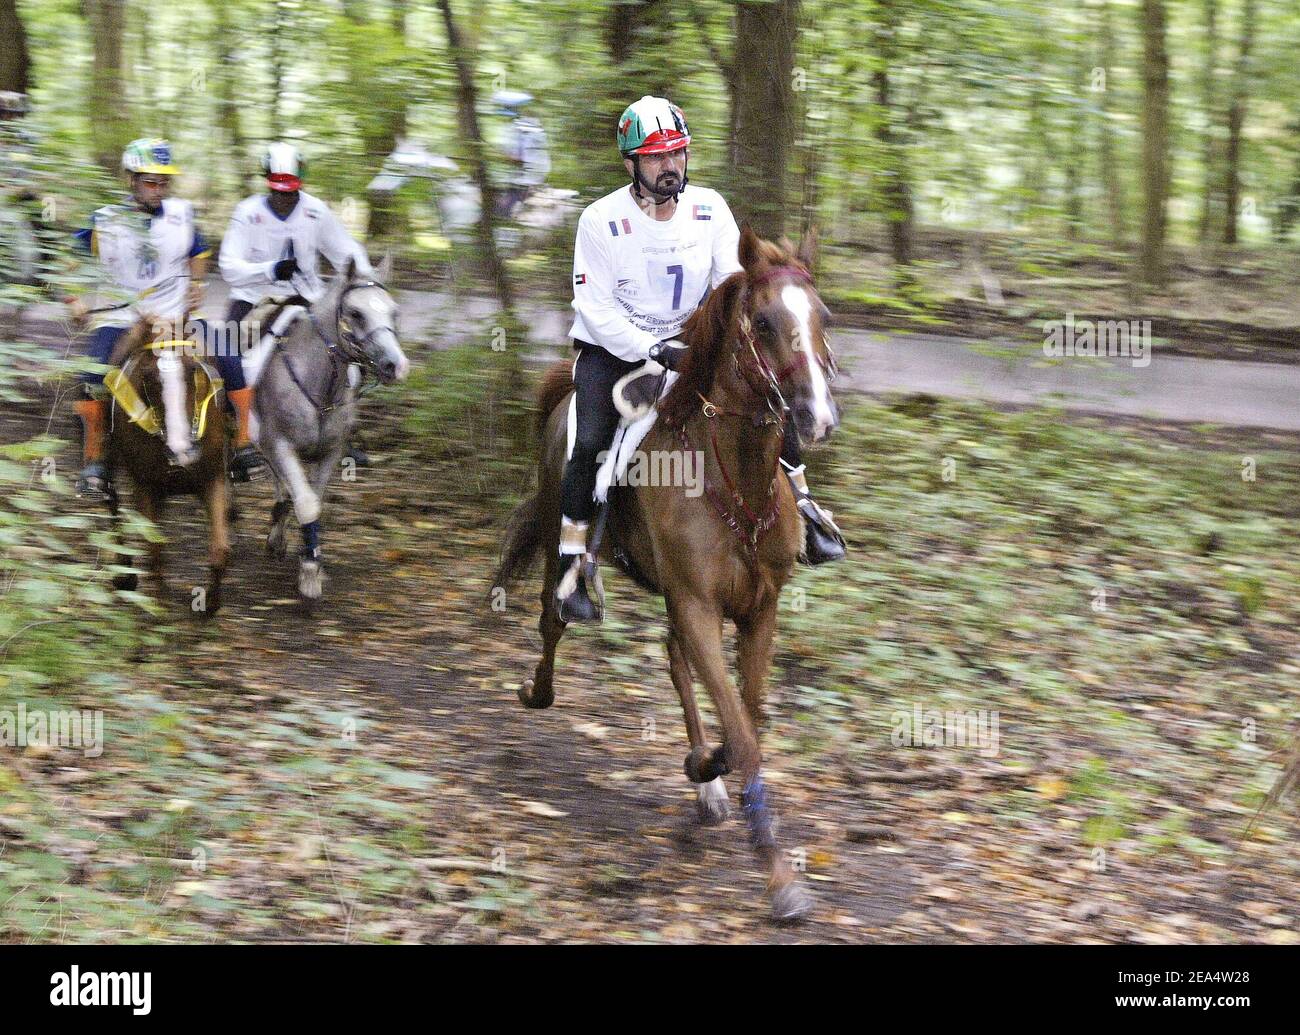 Sheikh Mohammed Al Maktoum races during the Horse Endurance European championship in Compiegne, France on August 26, 2005. Photo by Edouard Bernaux/ABACAPRESS.COM Stock Photo